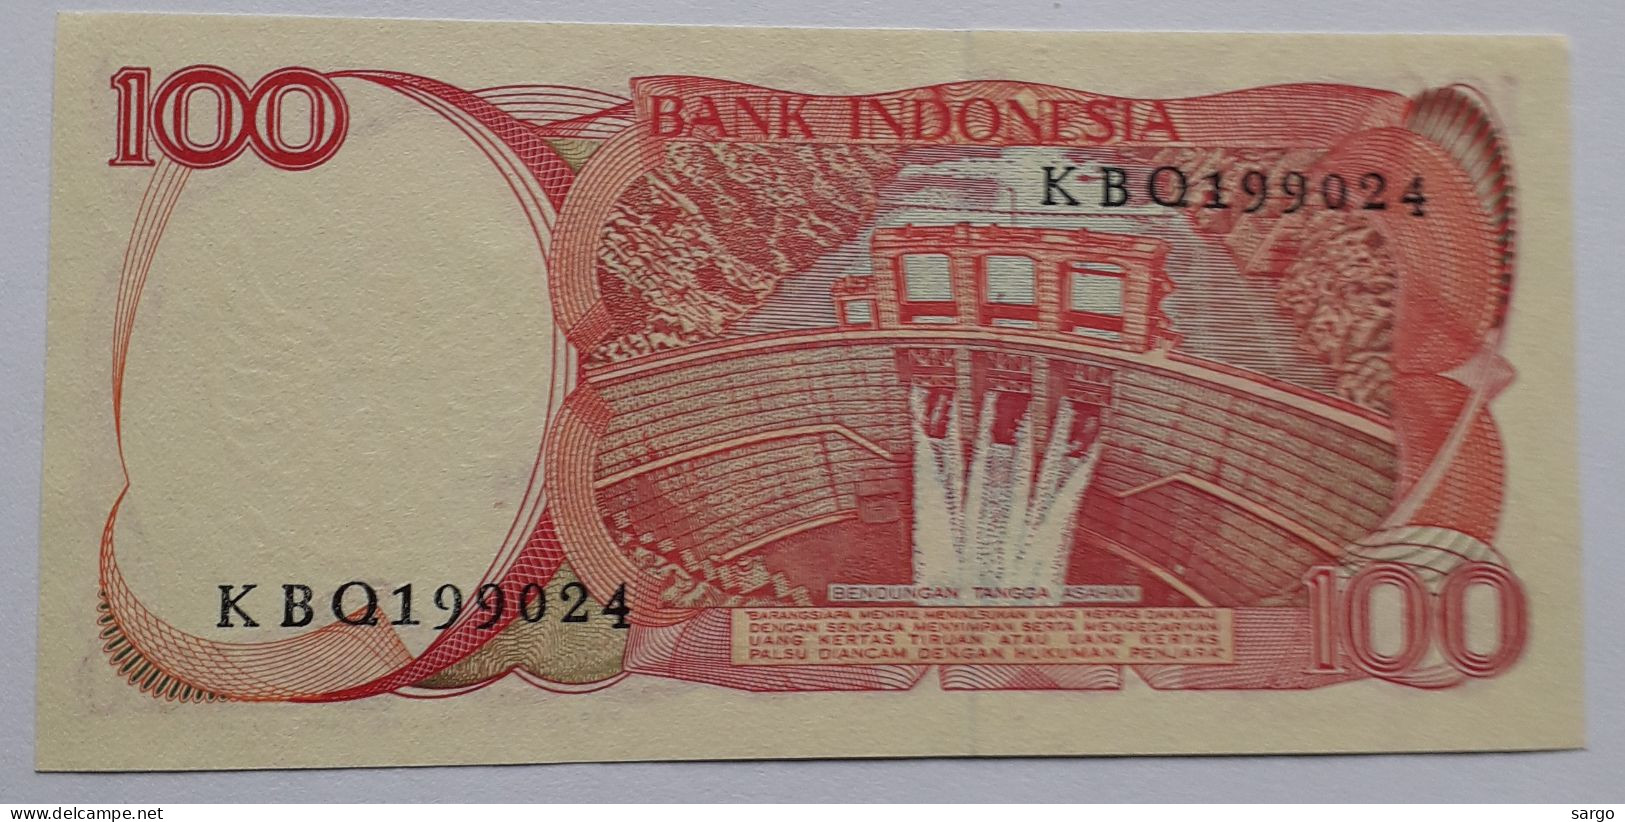 INDONEASIA - 100 RUPIAH - P 122 (1984) - UNCIRC - BANKNOTES - PAPER MONEY - CARTAMONETA - - Indonesië